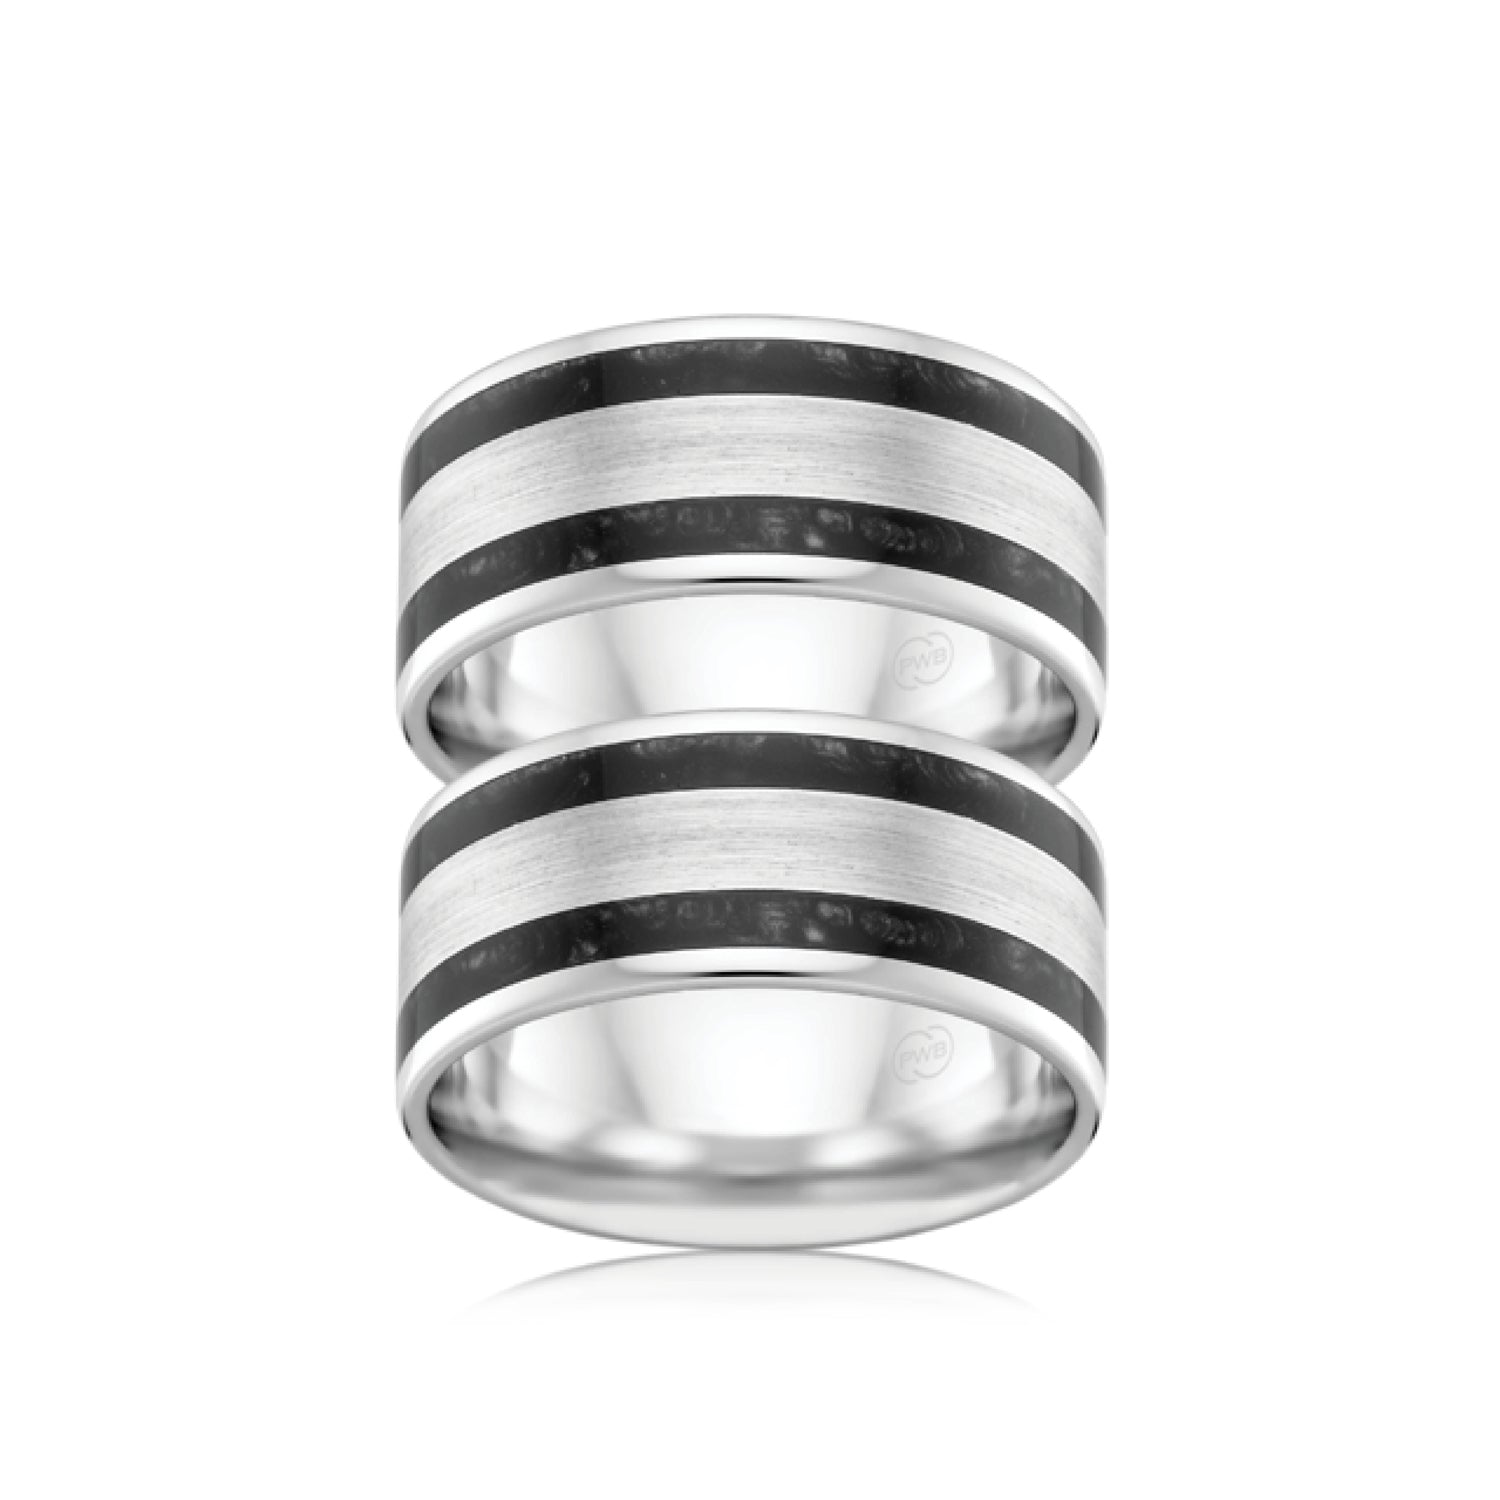 Men's Wedding ring with ceramic